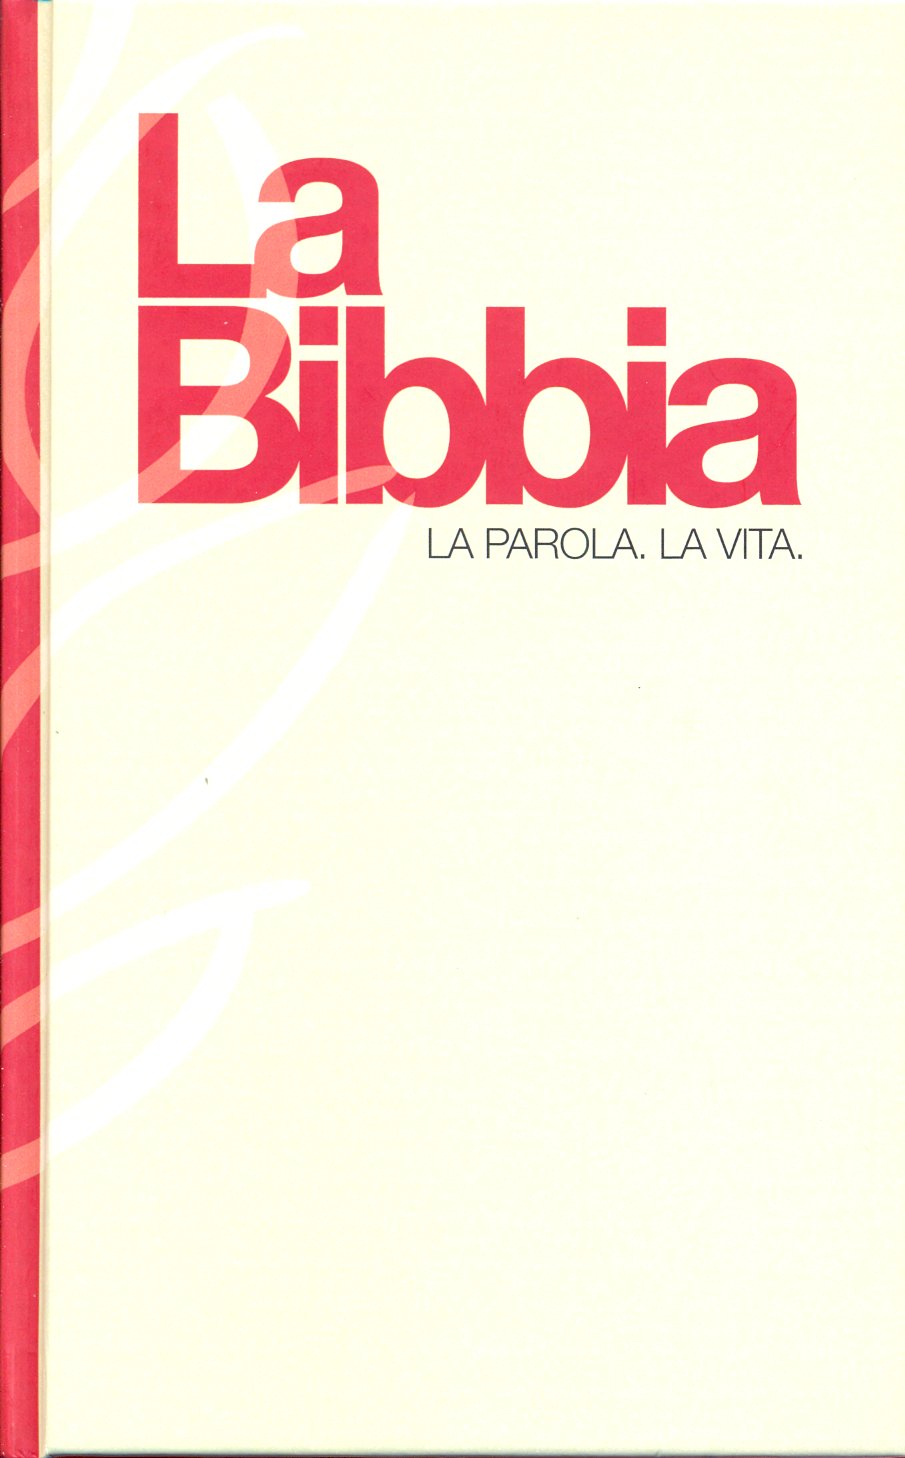 ITALIENISCH, BIBEL NUOVA RIVEDUTA, ILLUSTRIERT - LA PAROLA. LA VITA.